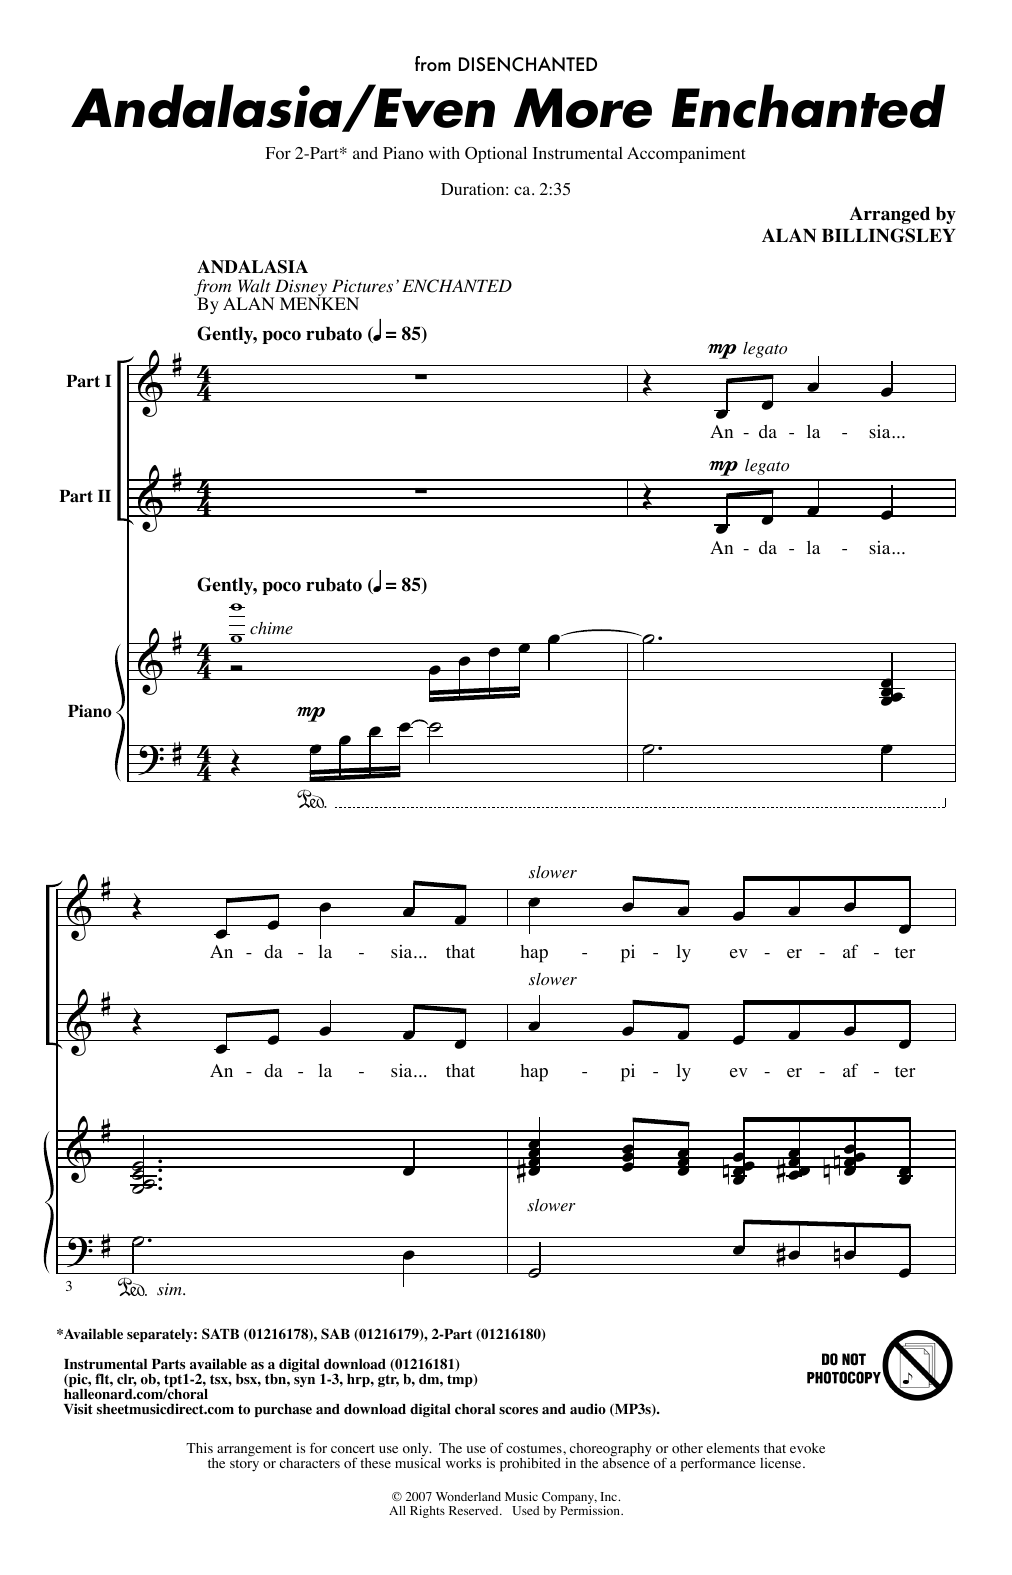 Alan Menken Andalasia / Even More Enchanted (arr. Alan Billingsley) Sheet Music Notes & Chords for 2-Part Choir - Download or Print PDF